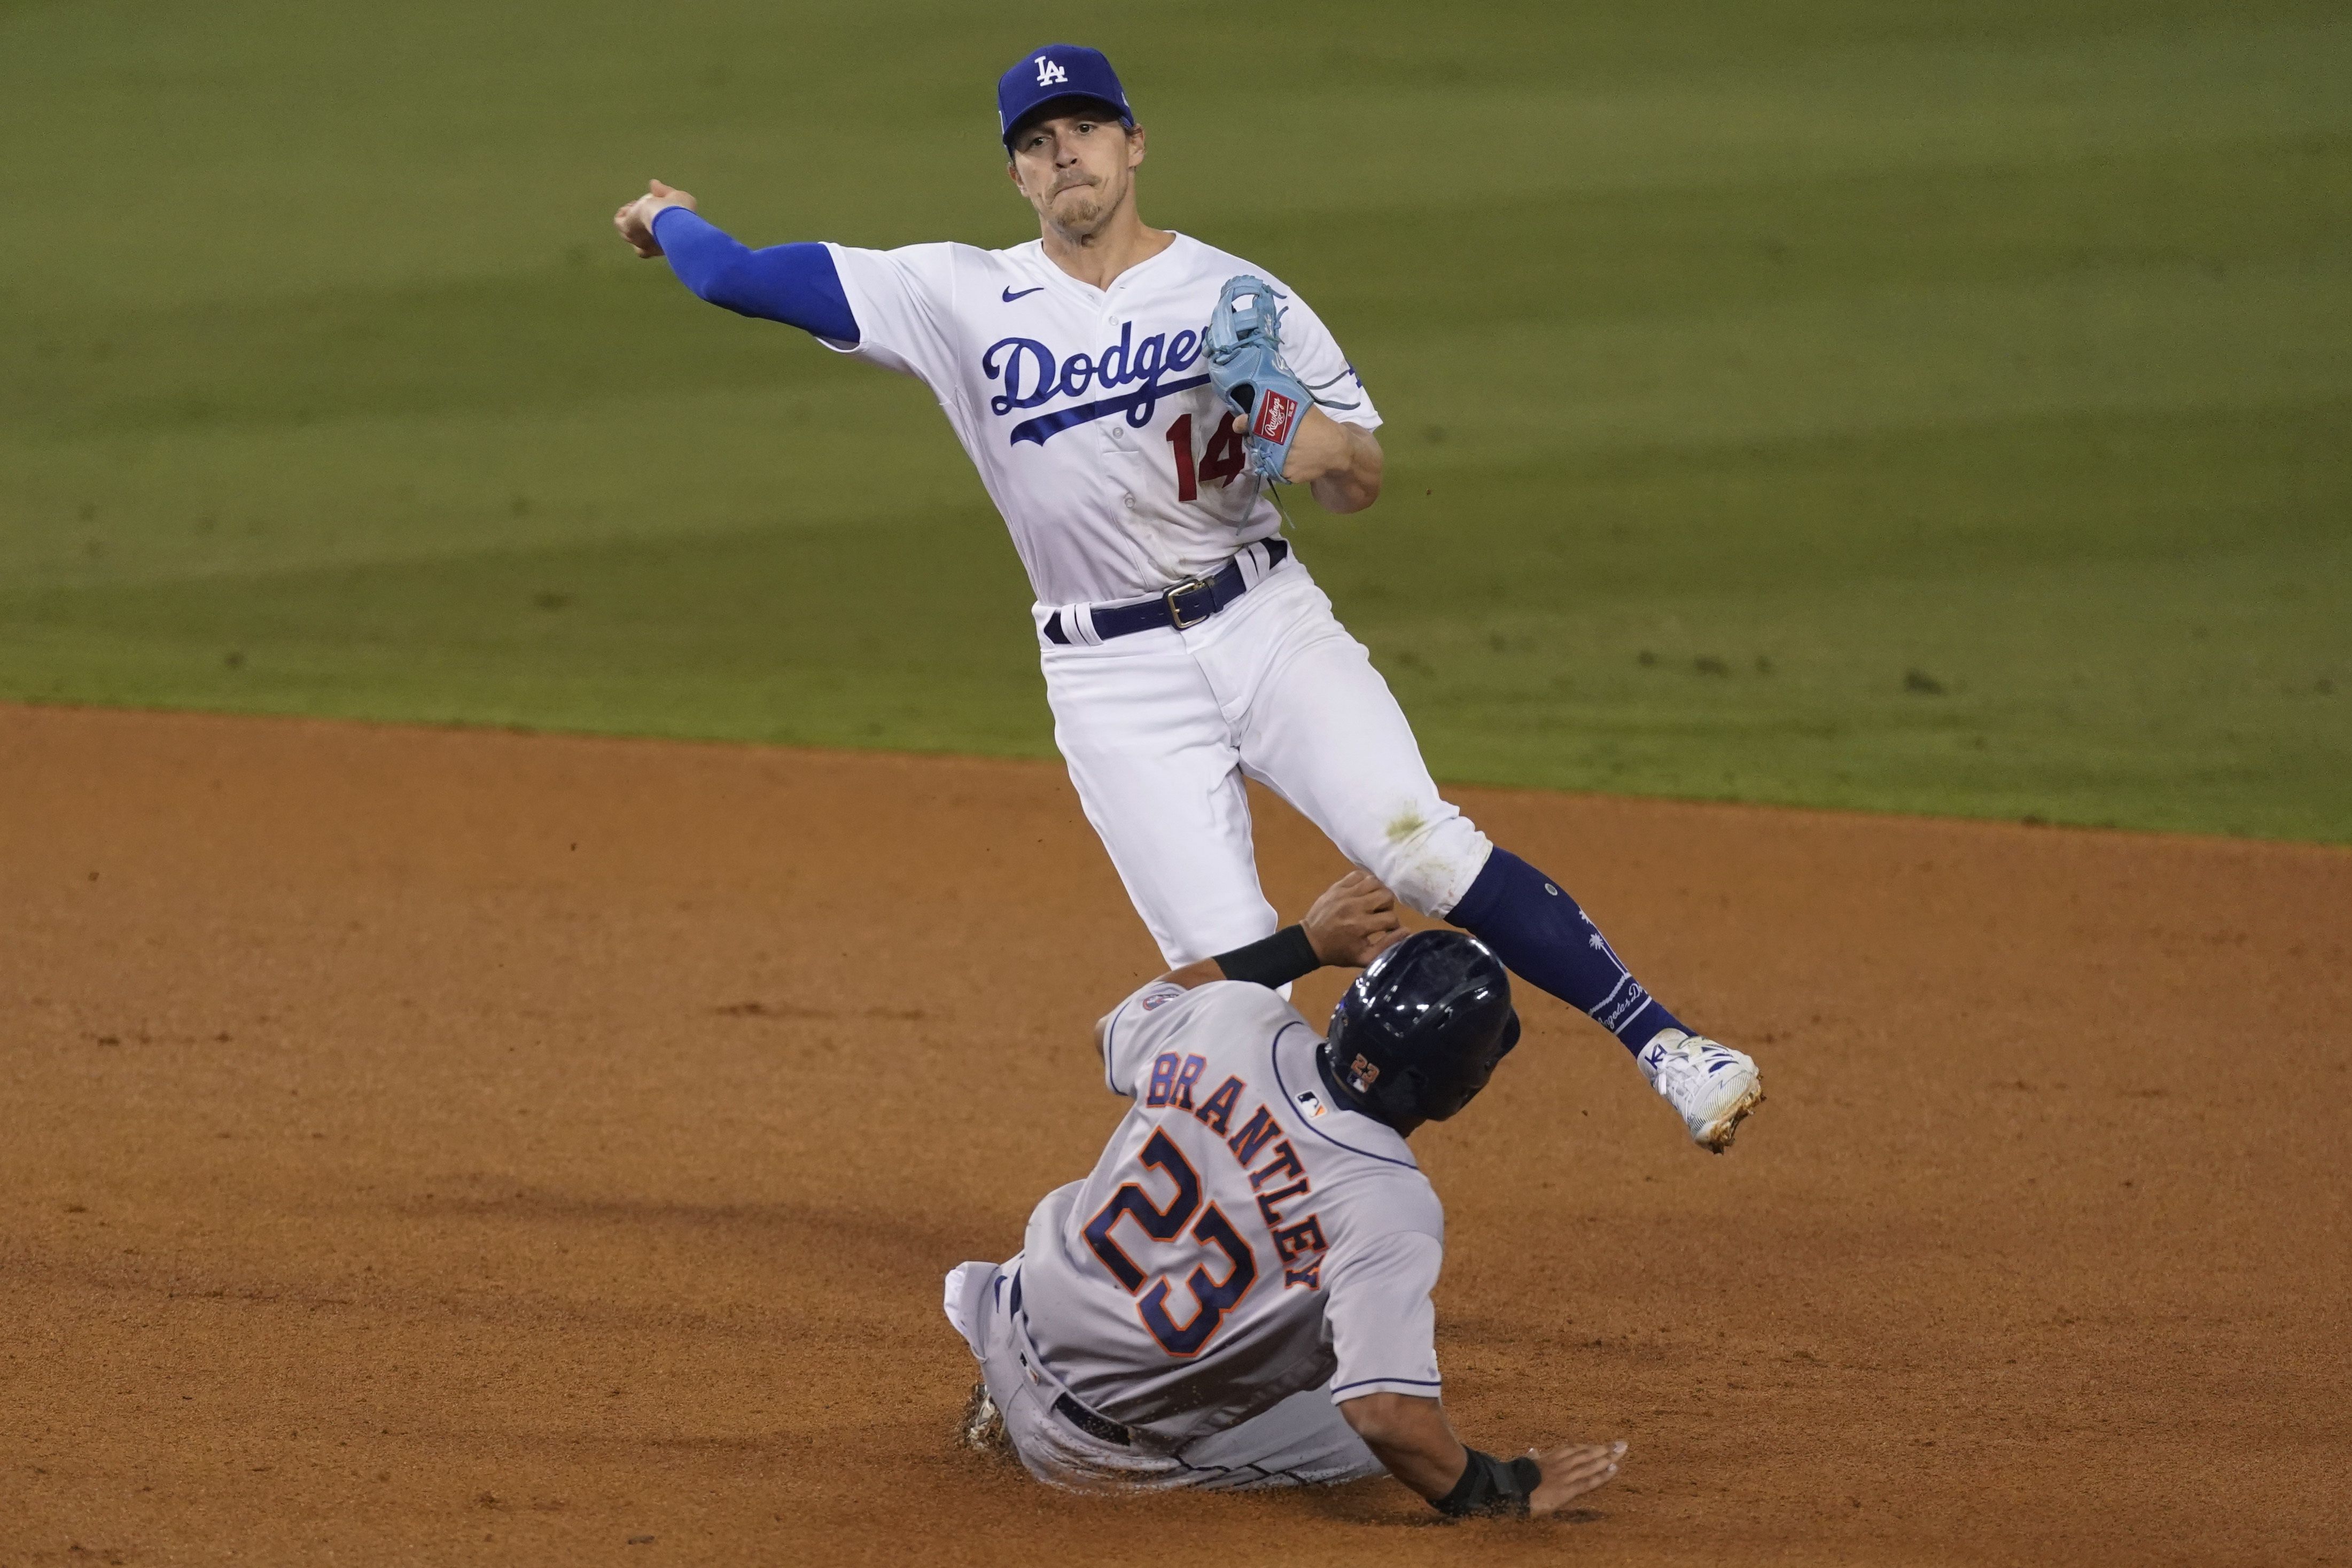 Dodgers' 19-year-old rookie Julio Urias holding up under bright spotlight